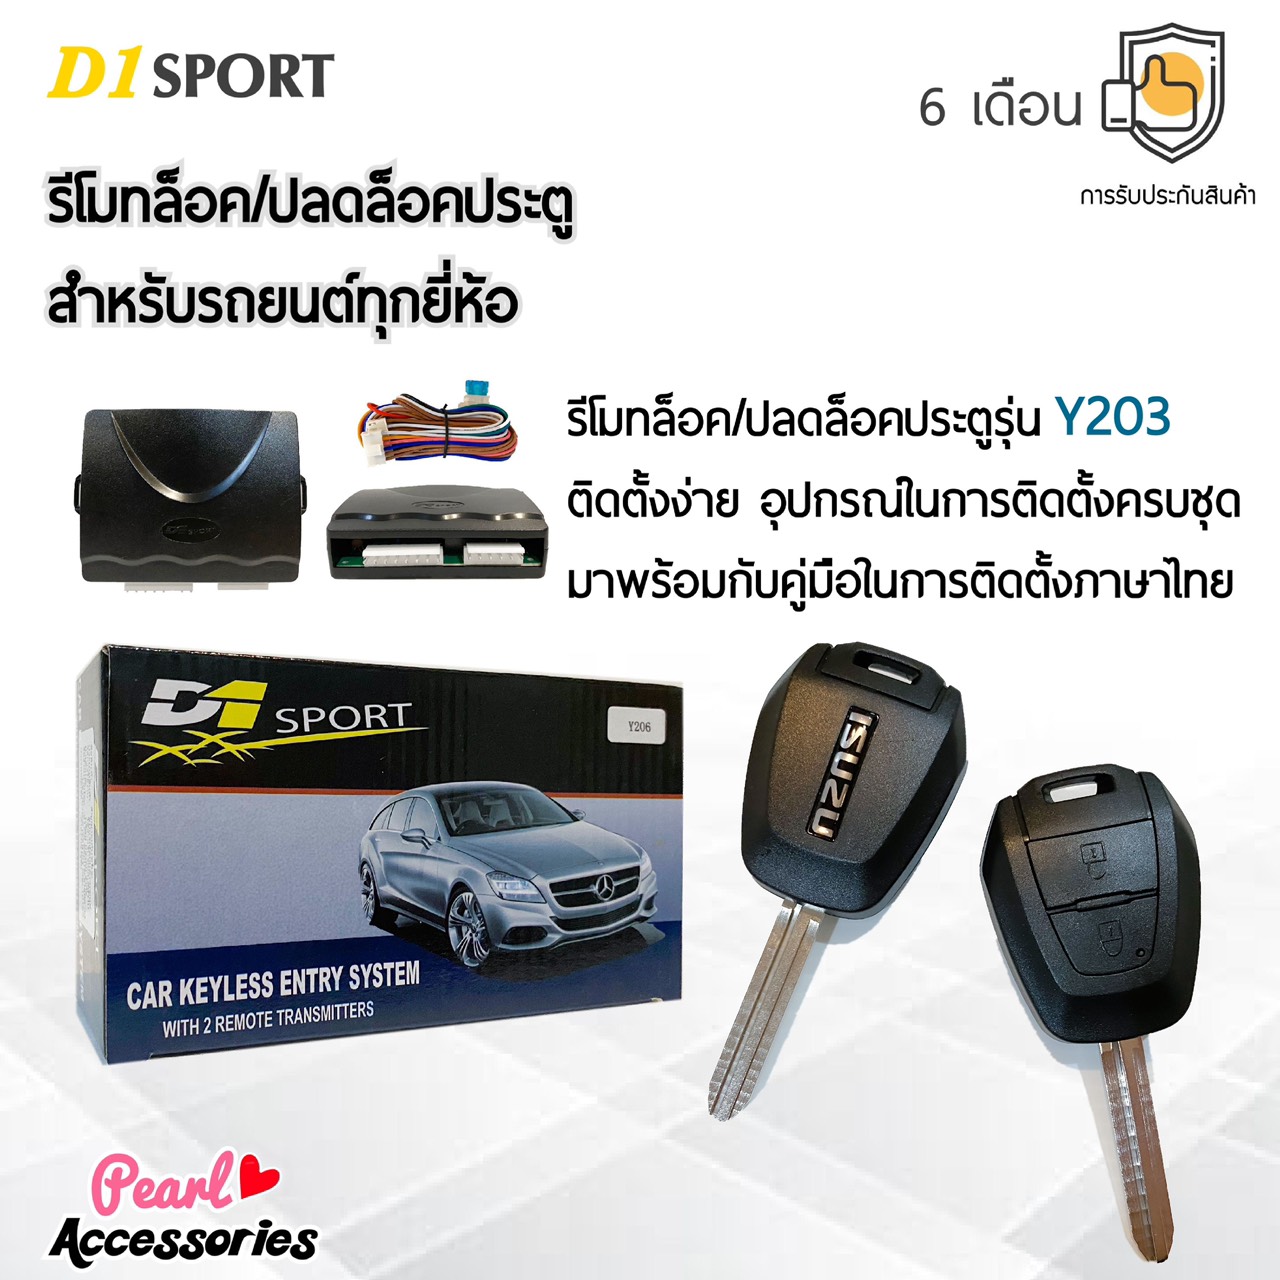 D1 Sport รีโมทล็อค/ปลดล็อคประตูรถยนต์ Y203 กุญแจทรง Isuzu สำหรับรถยนต์ทุกยี่ห้อ อุปกรณ์ในการติดตั้งครบชุด (คู่มือในการติดตั้งภาษาไทย) Car keyless